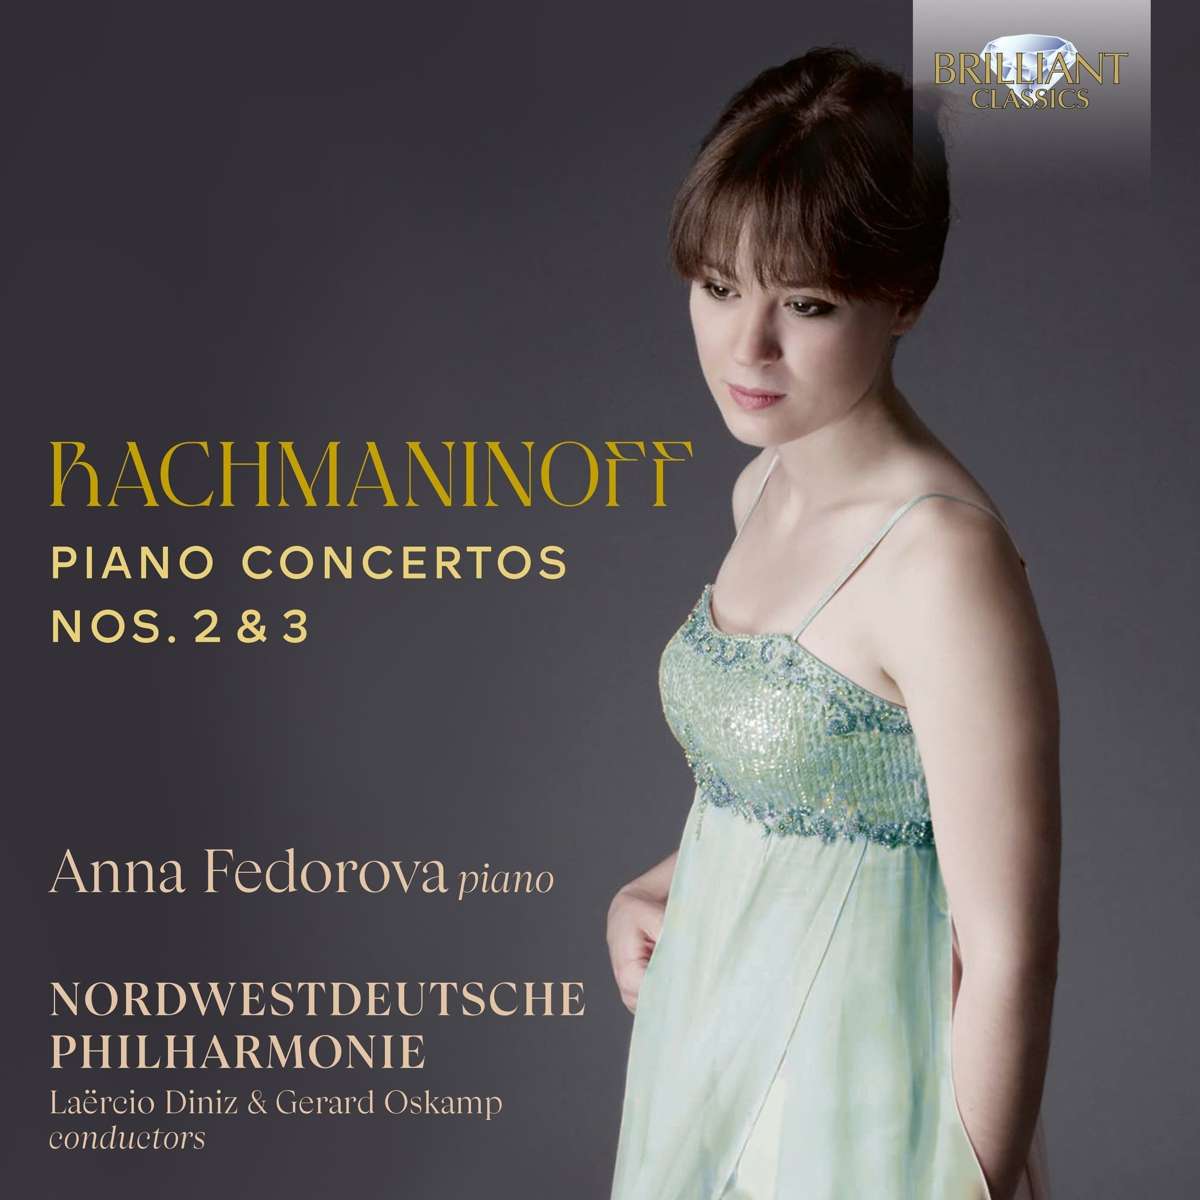 Rachmaninoff: Piano Concertos Nos. 2 & 3 / Anna Federova